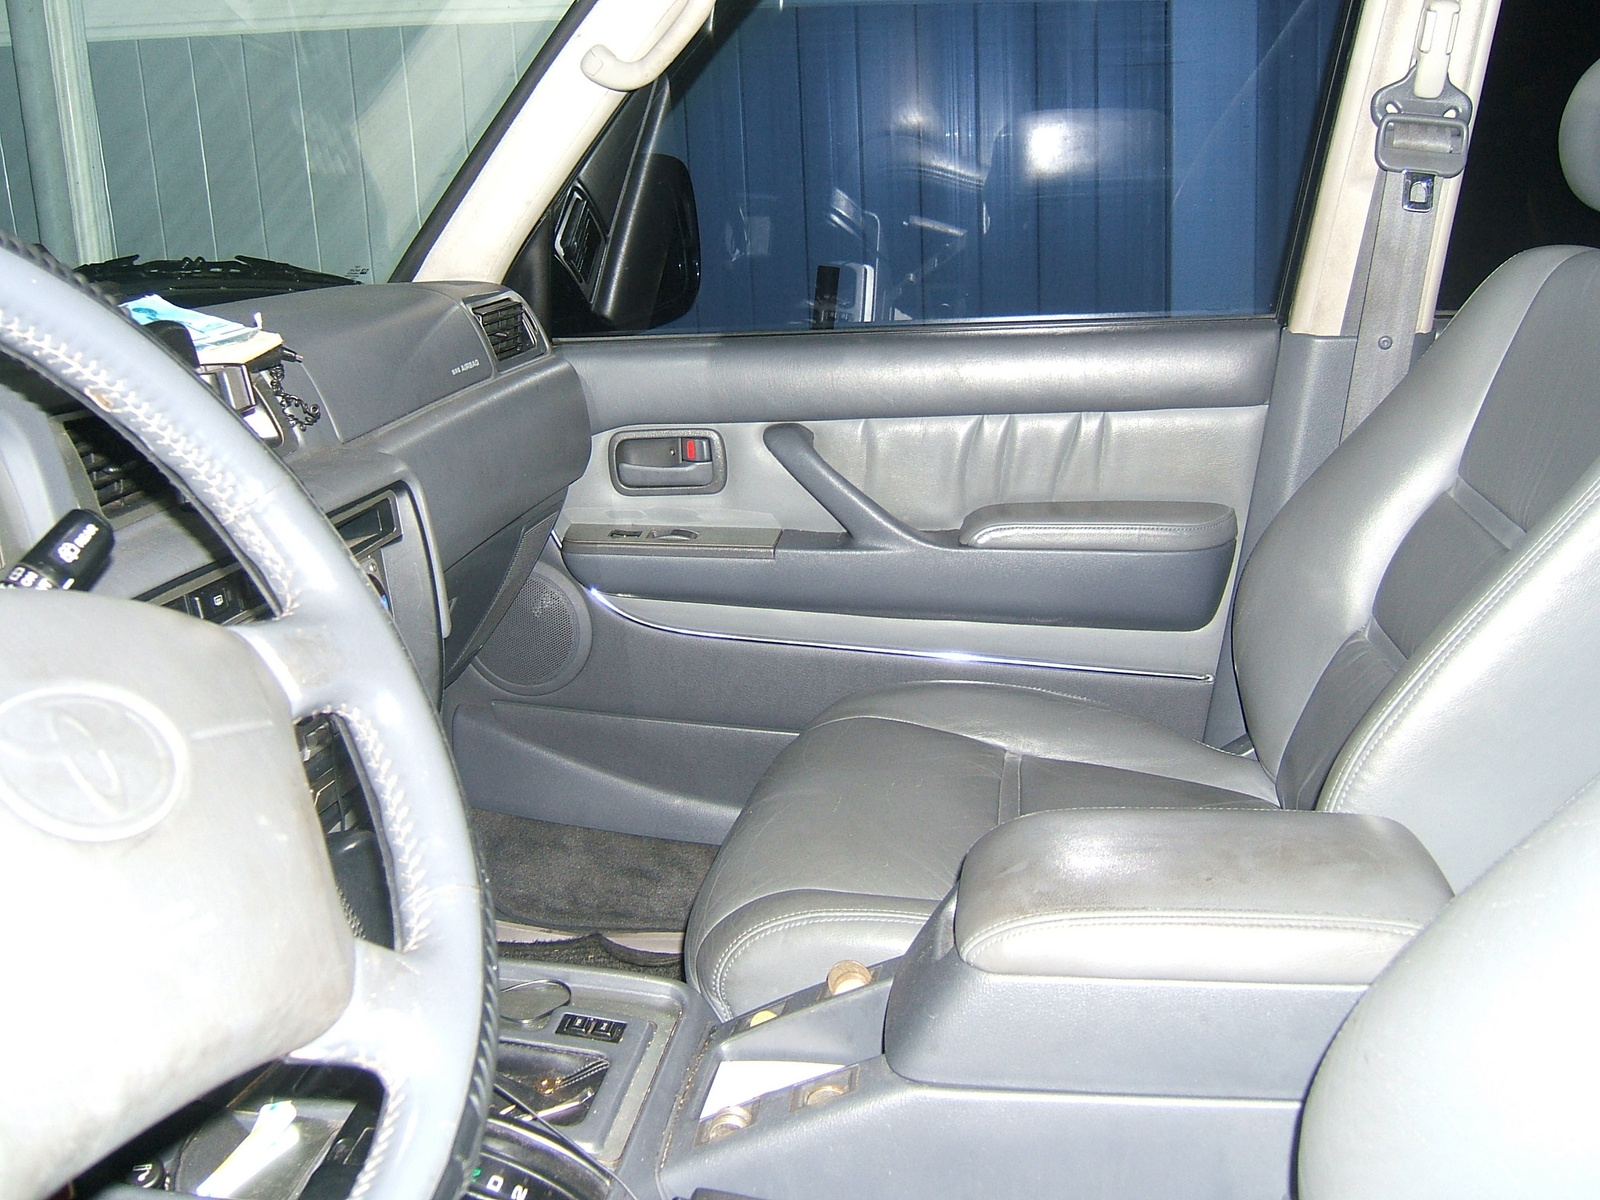 1997 toyota land cruiser interior #7